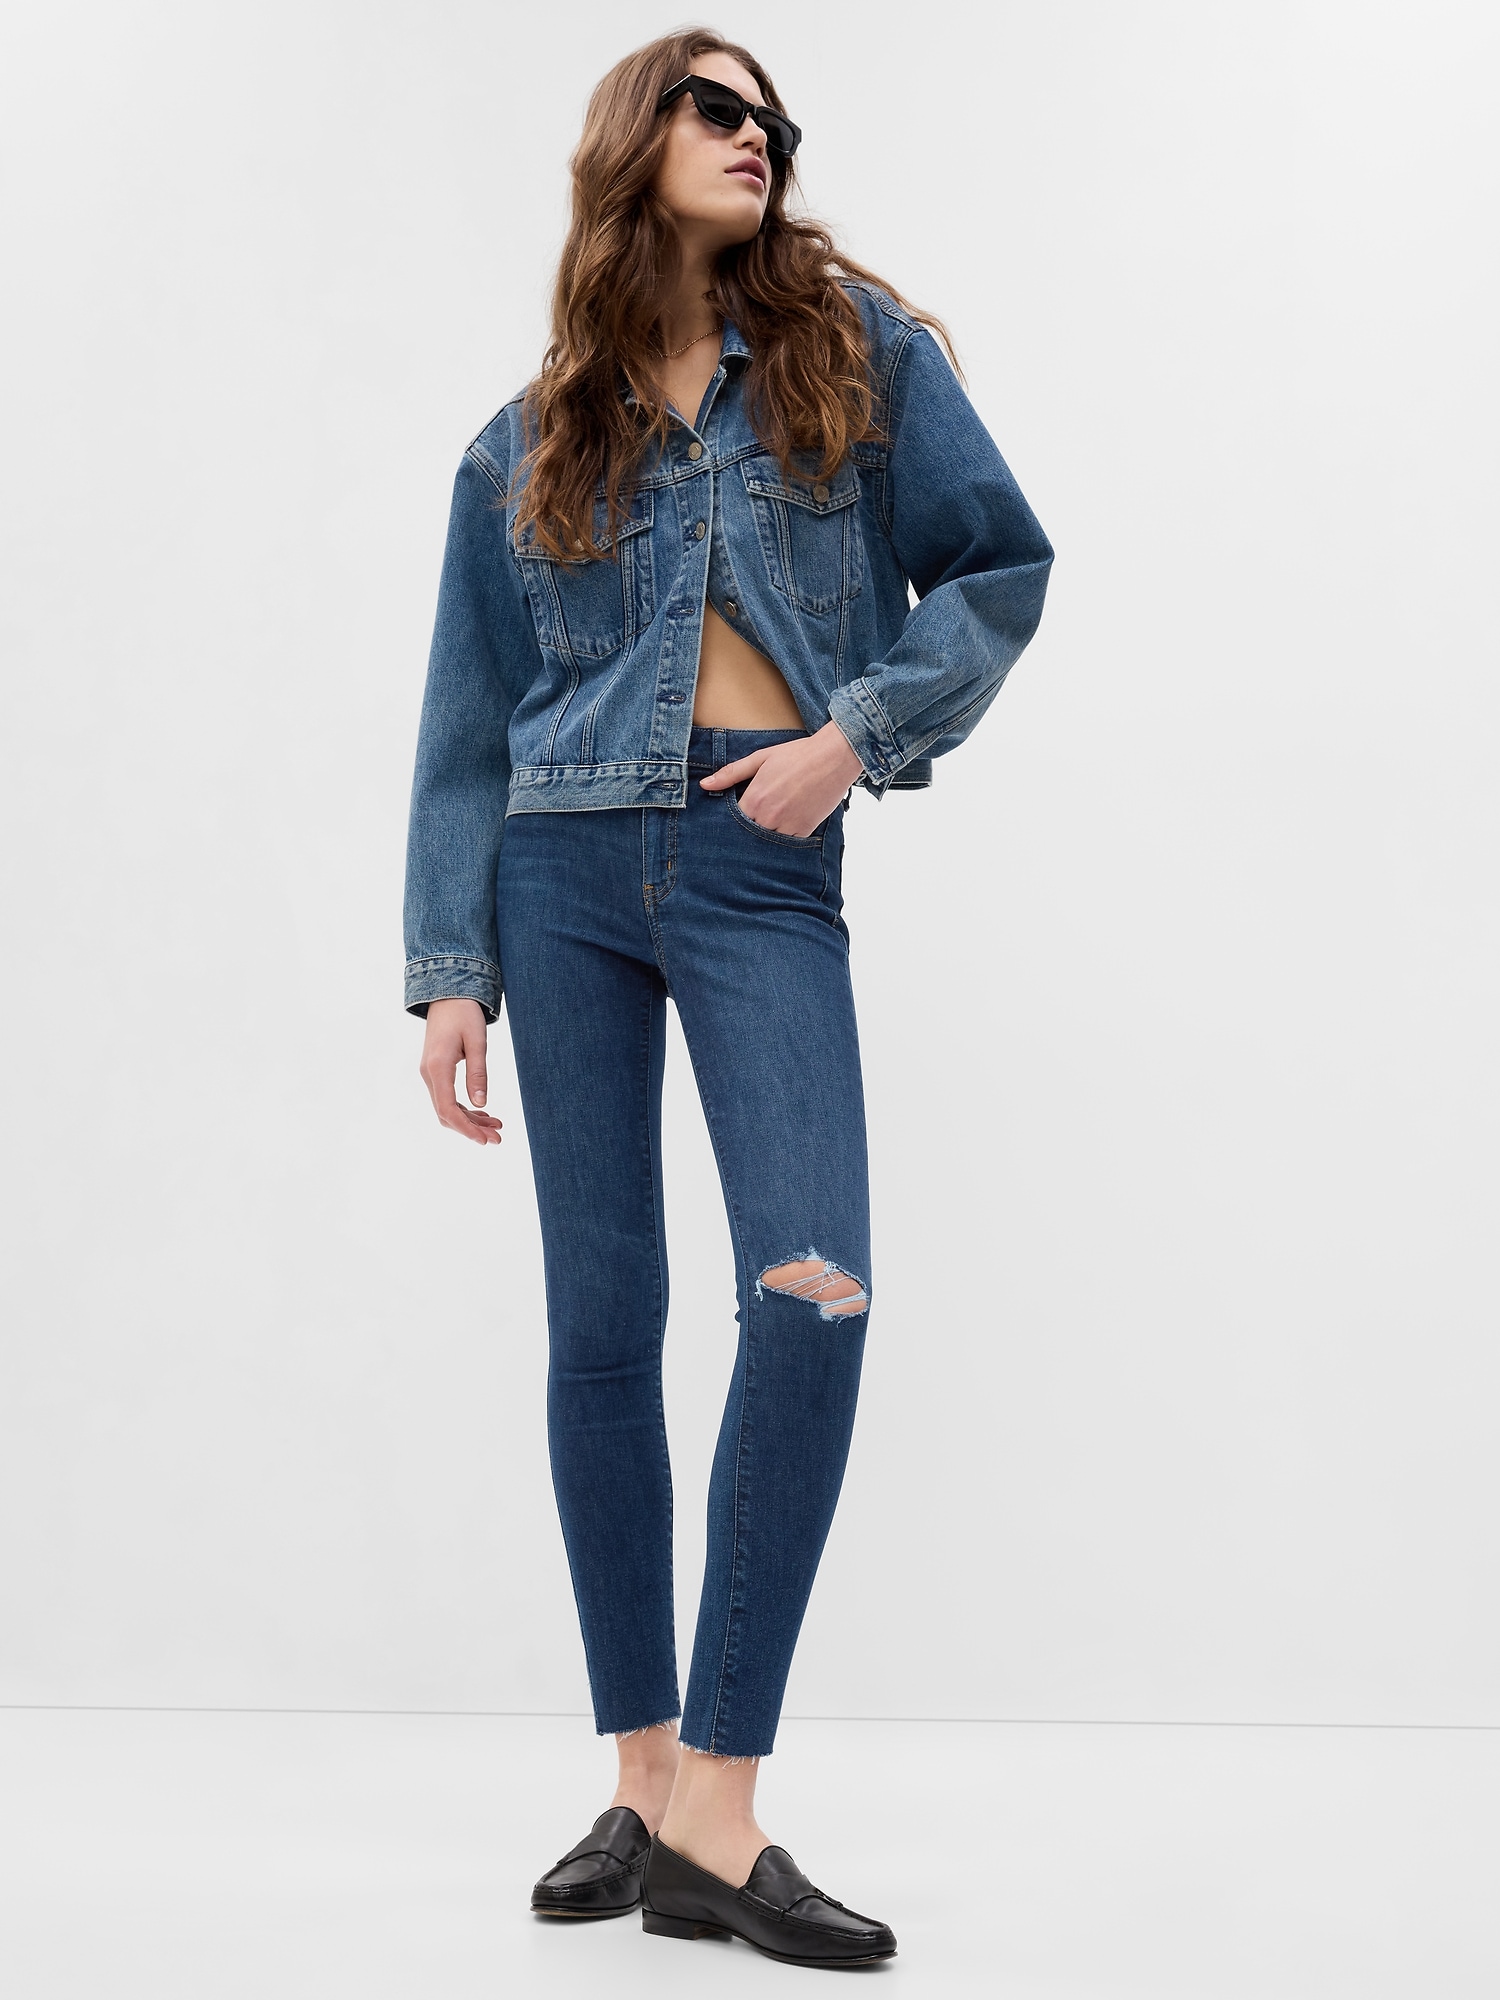 GAP, Jeans, Gap Tall Jeggings Size 24